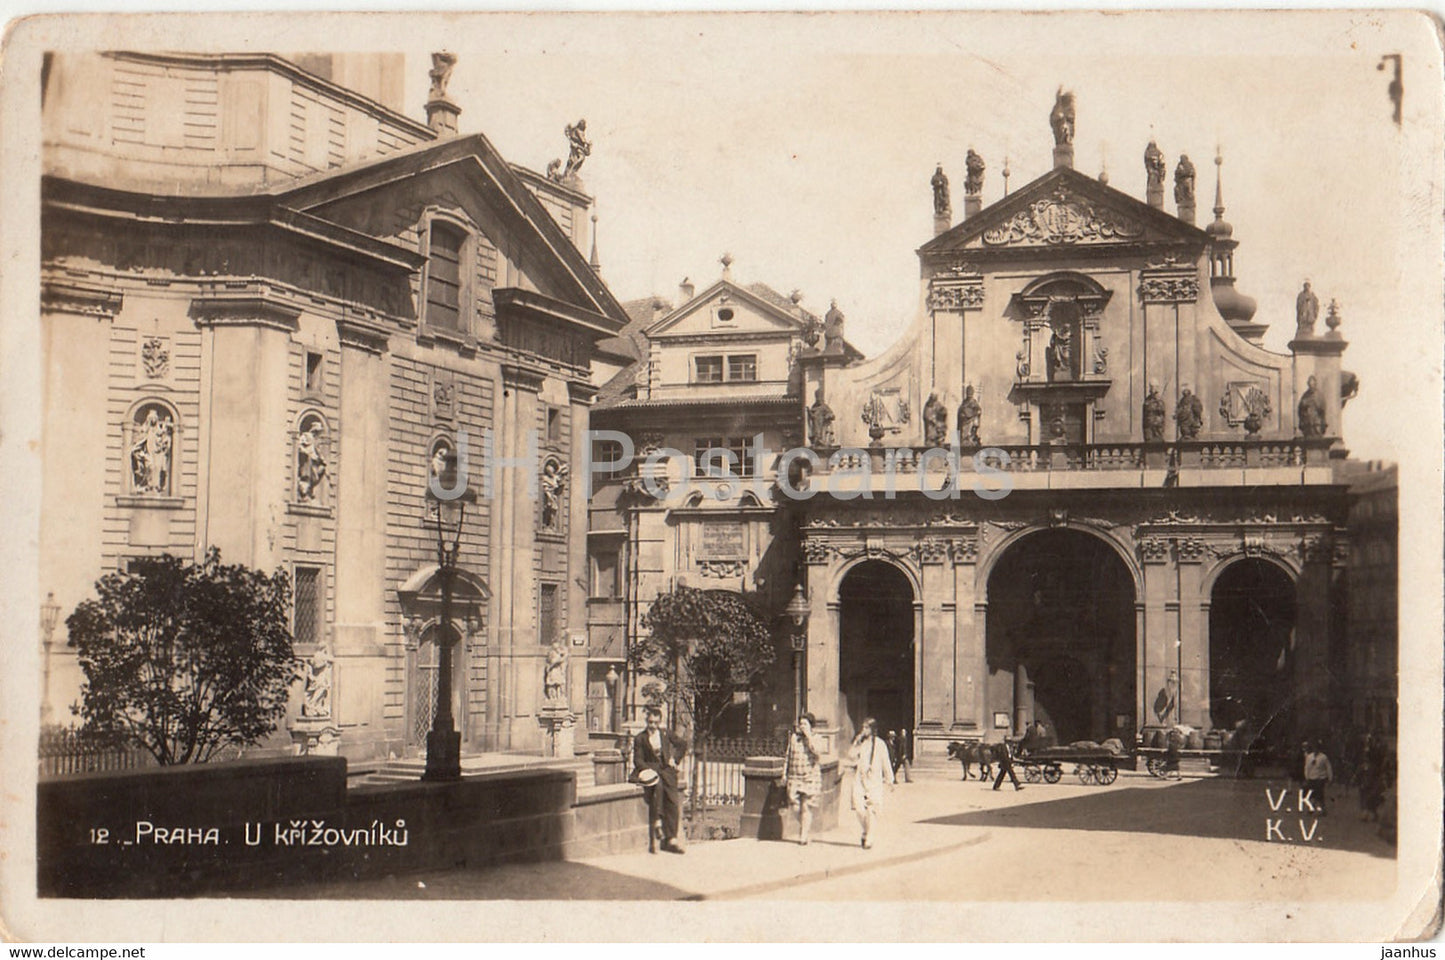 Praha - Prague - U Krizovniku - Crusaders Monastery - VKKV - 12 - old postcard - 1931 - Czech Republic - used - JH Postcards